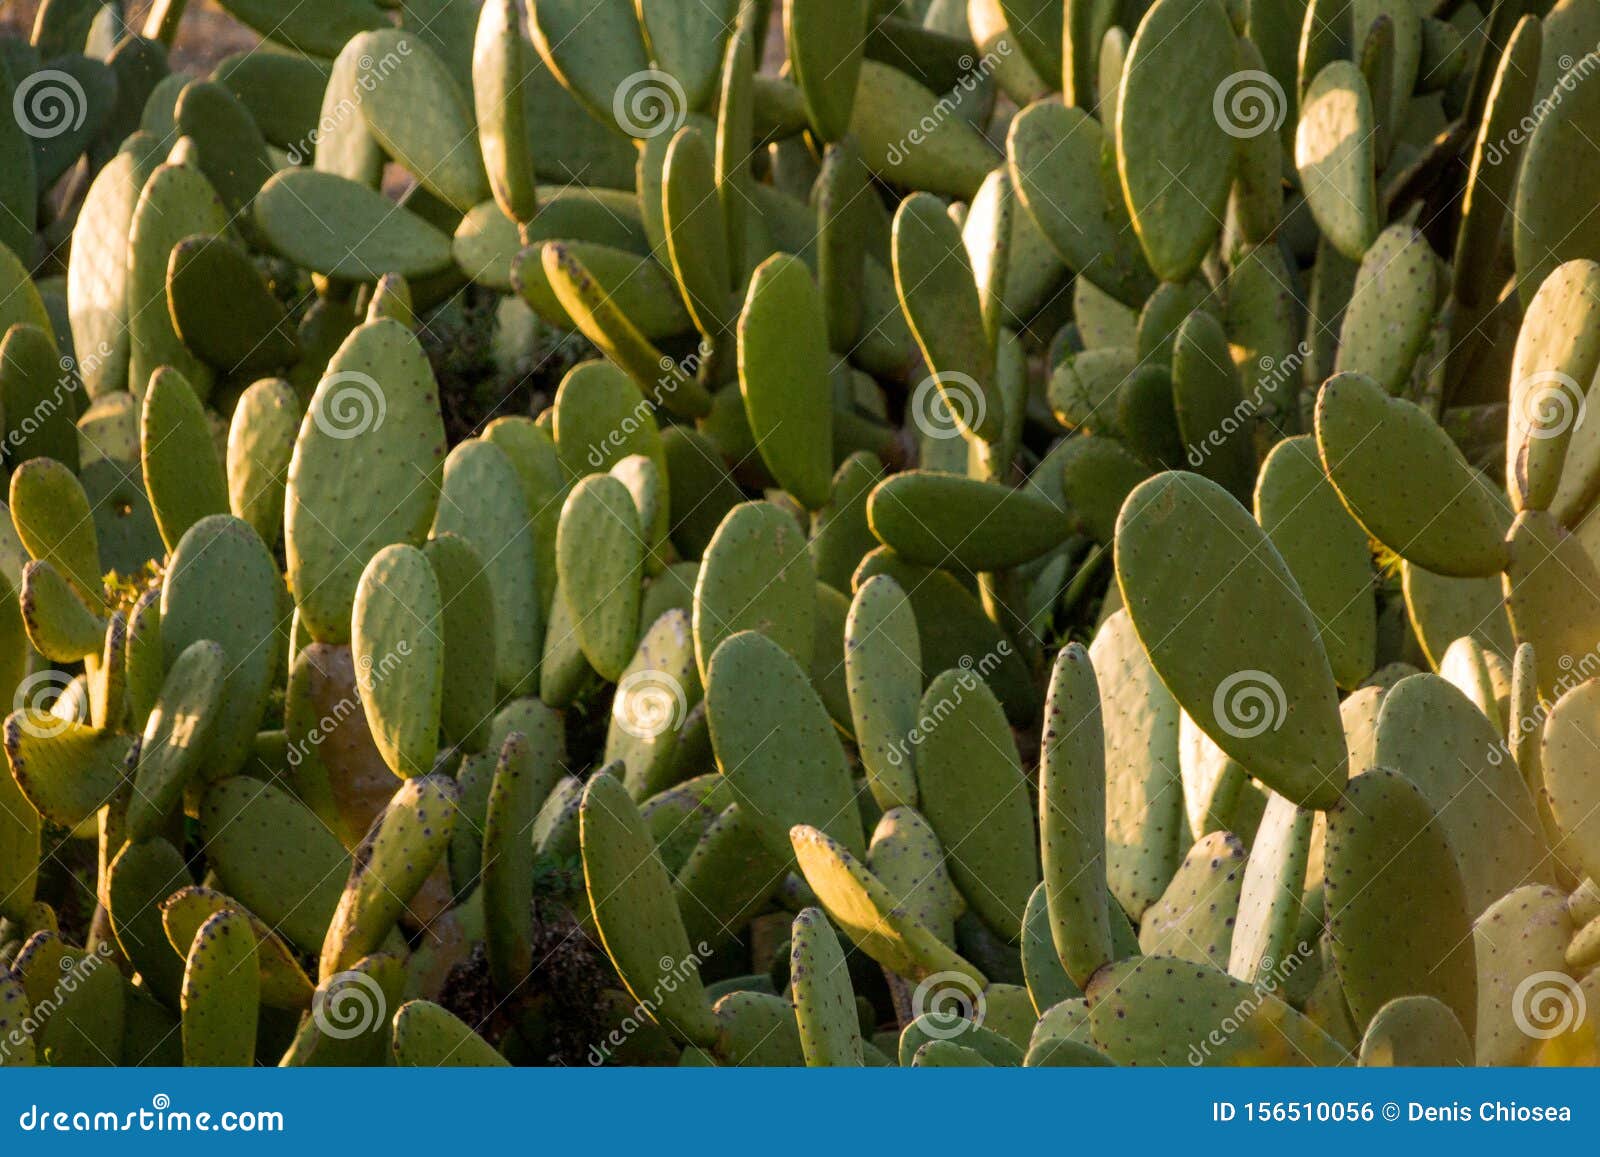 chumbera nopal cactus in a spanish beach